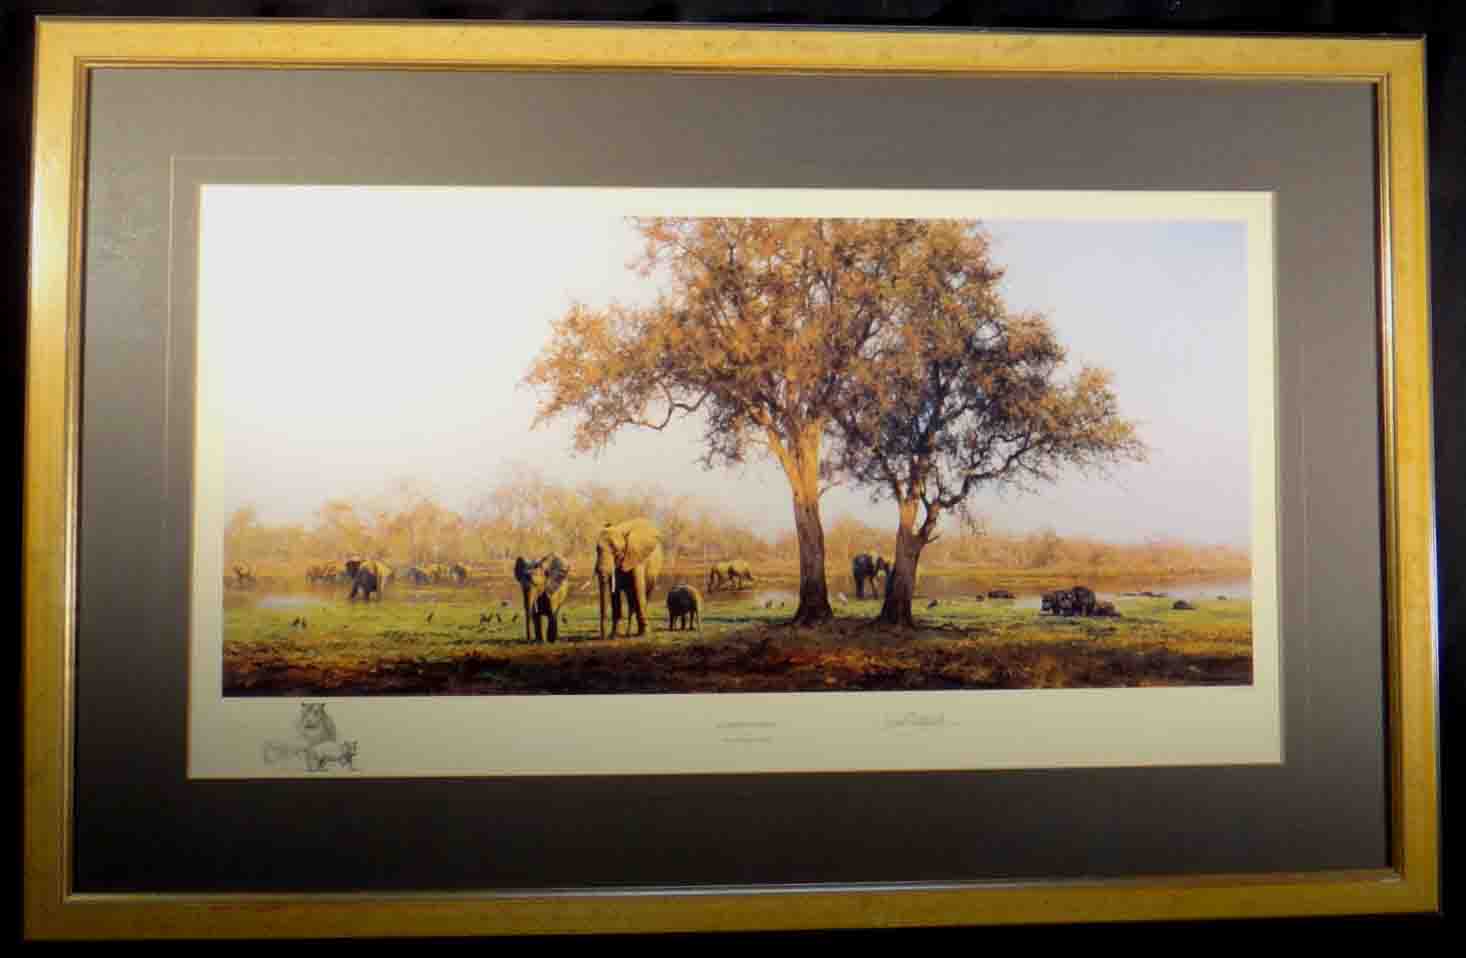 david shepherd, Luangwa Evening, signed limited edition print